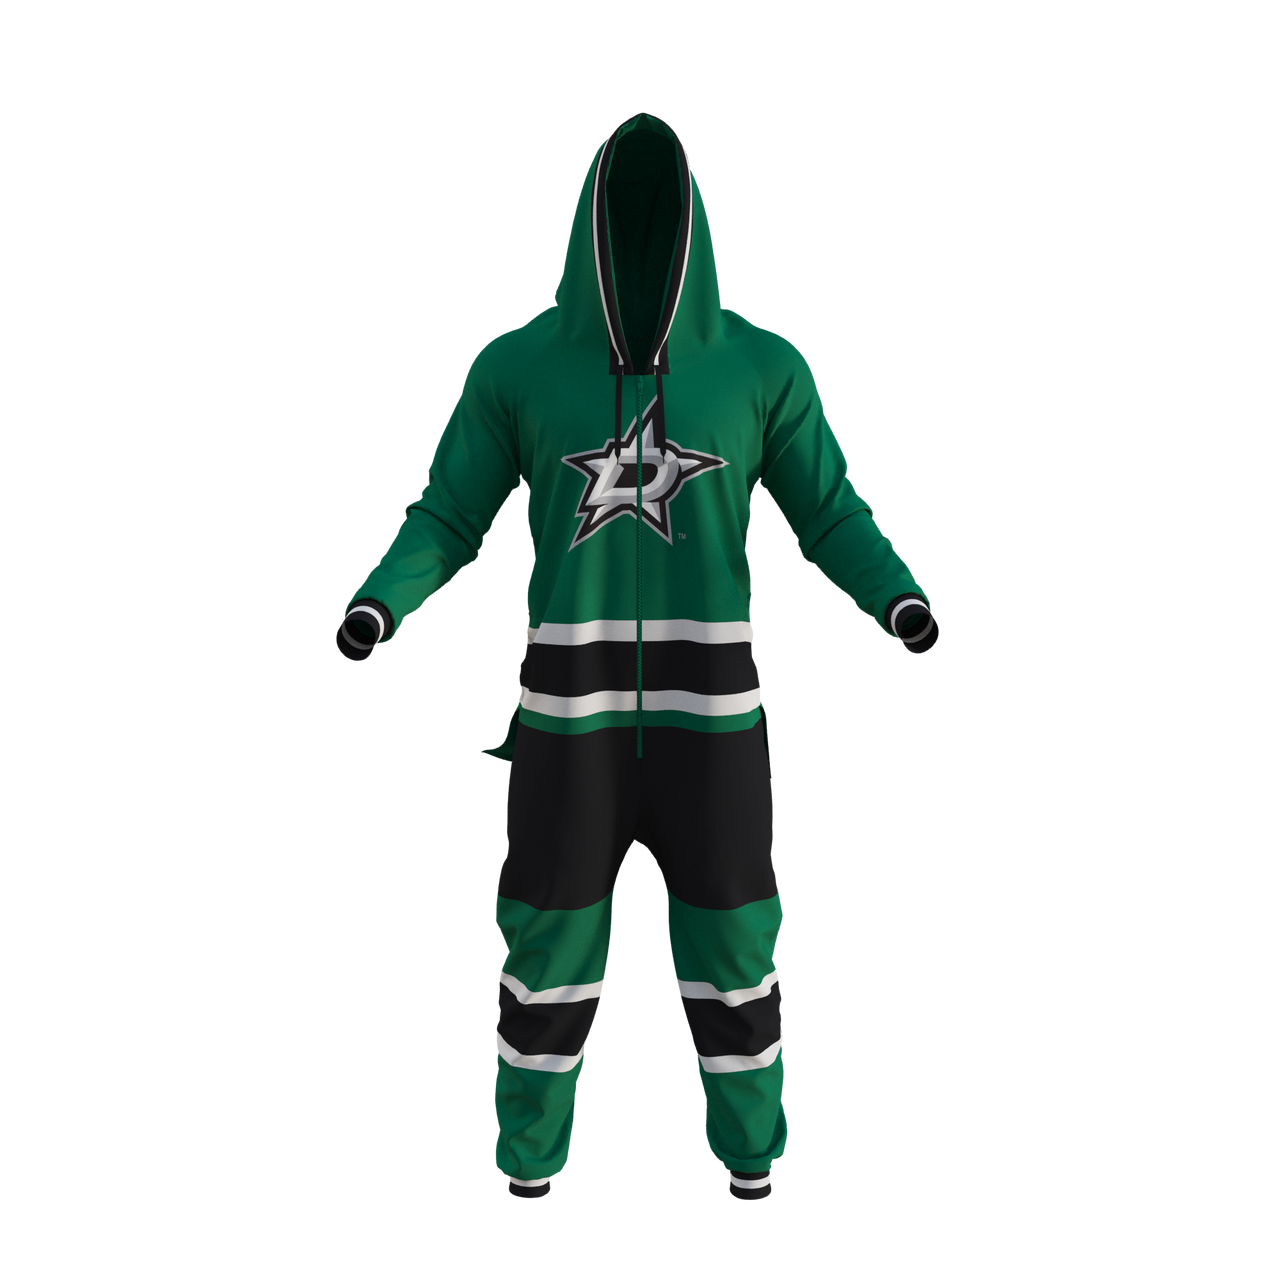 dallas stars hockey hoodie